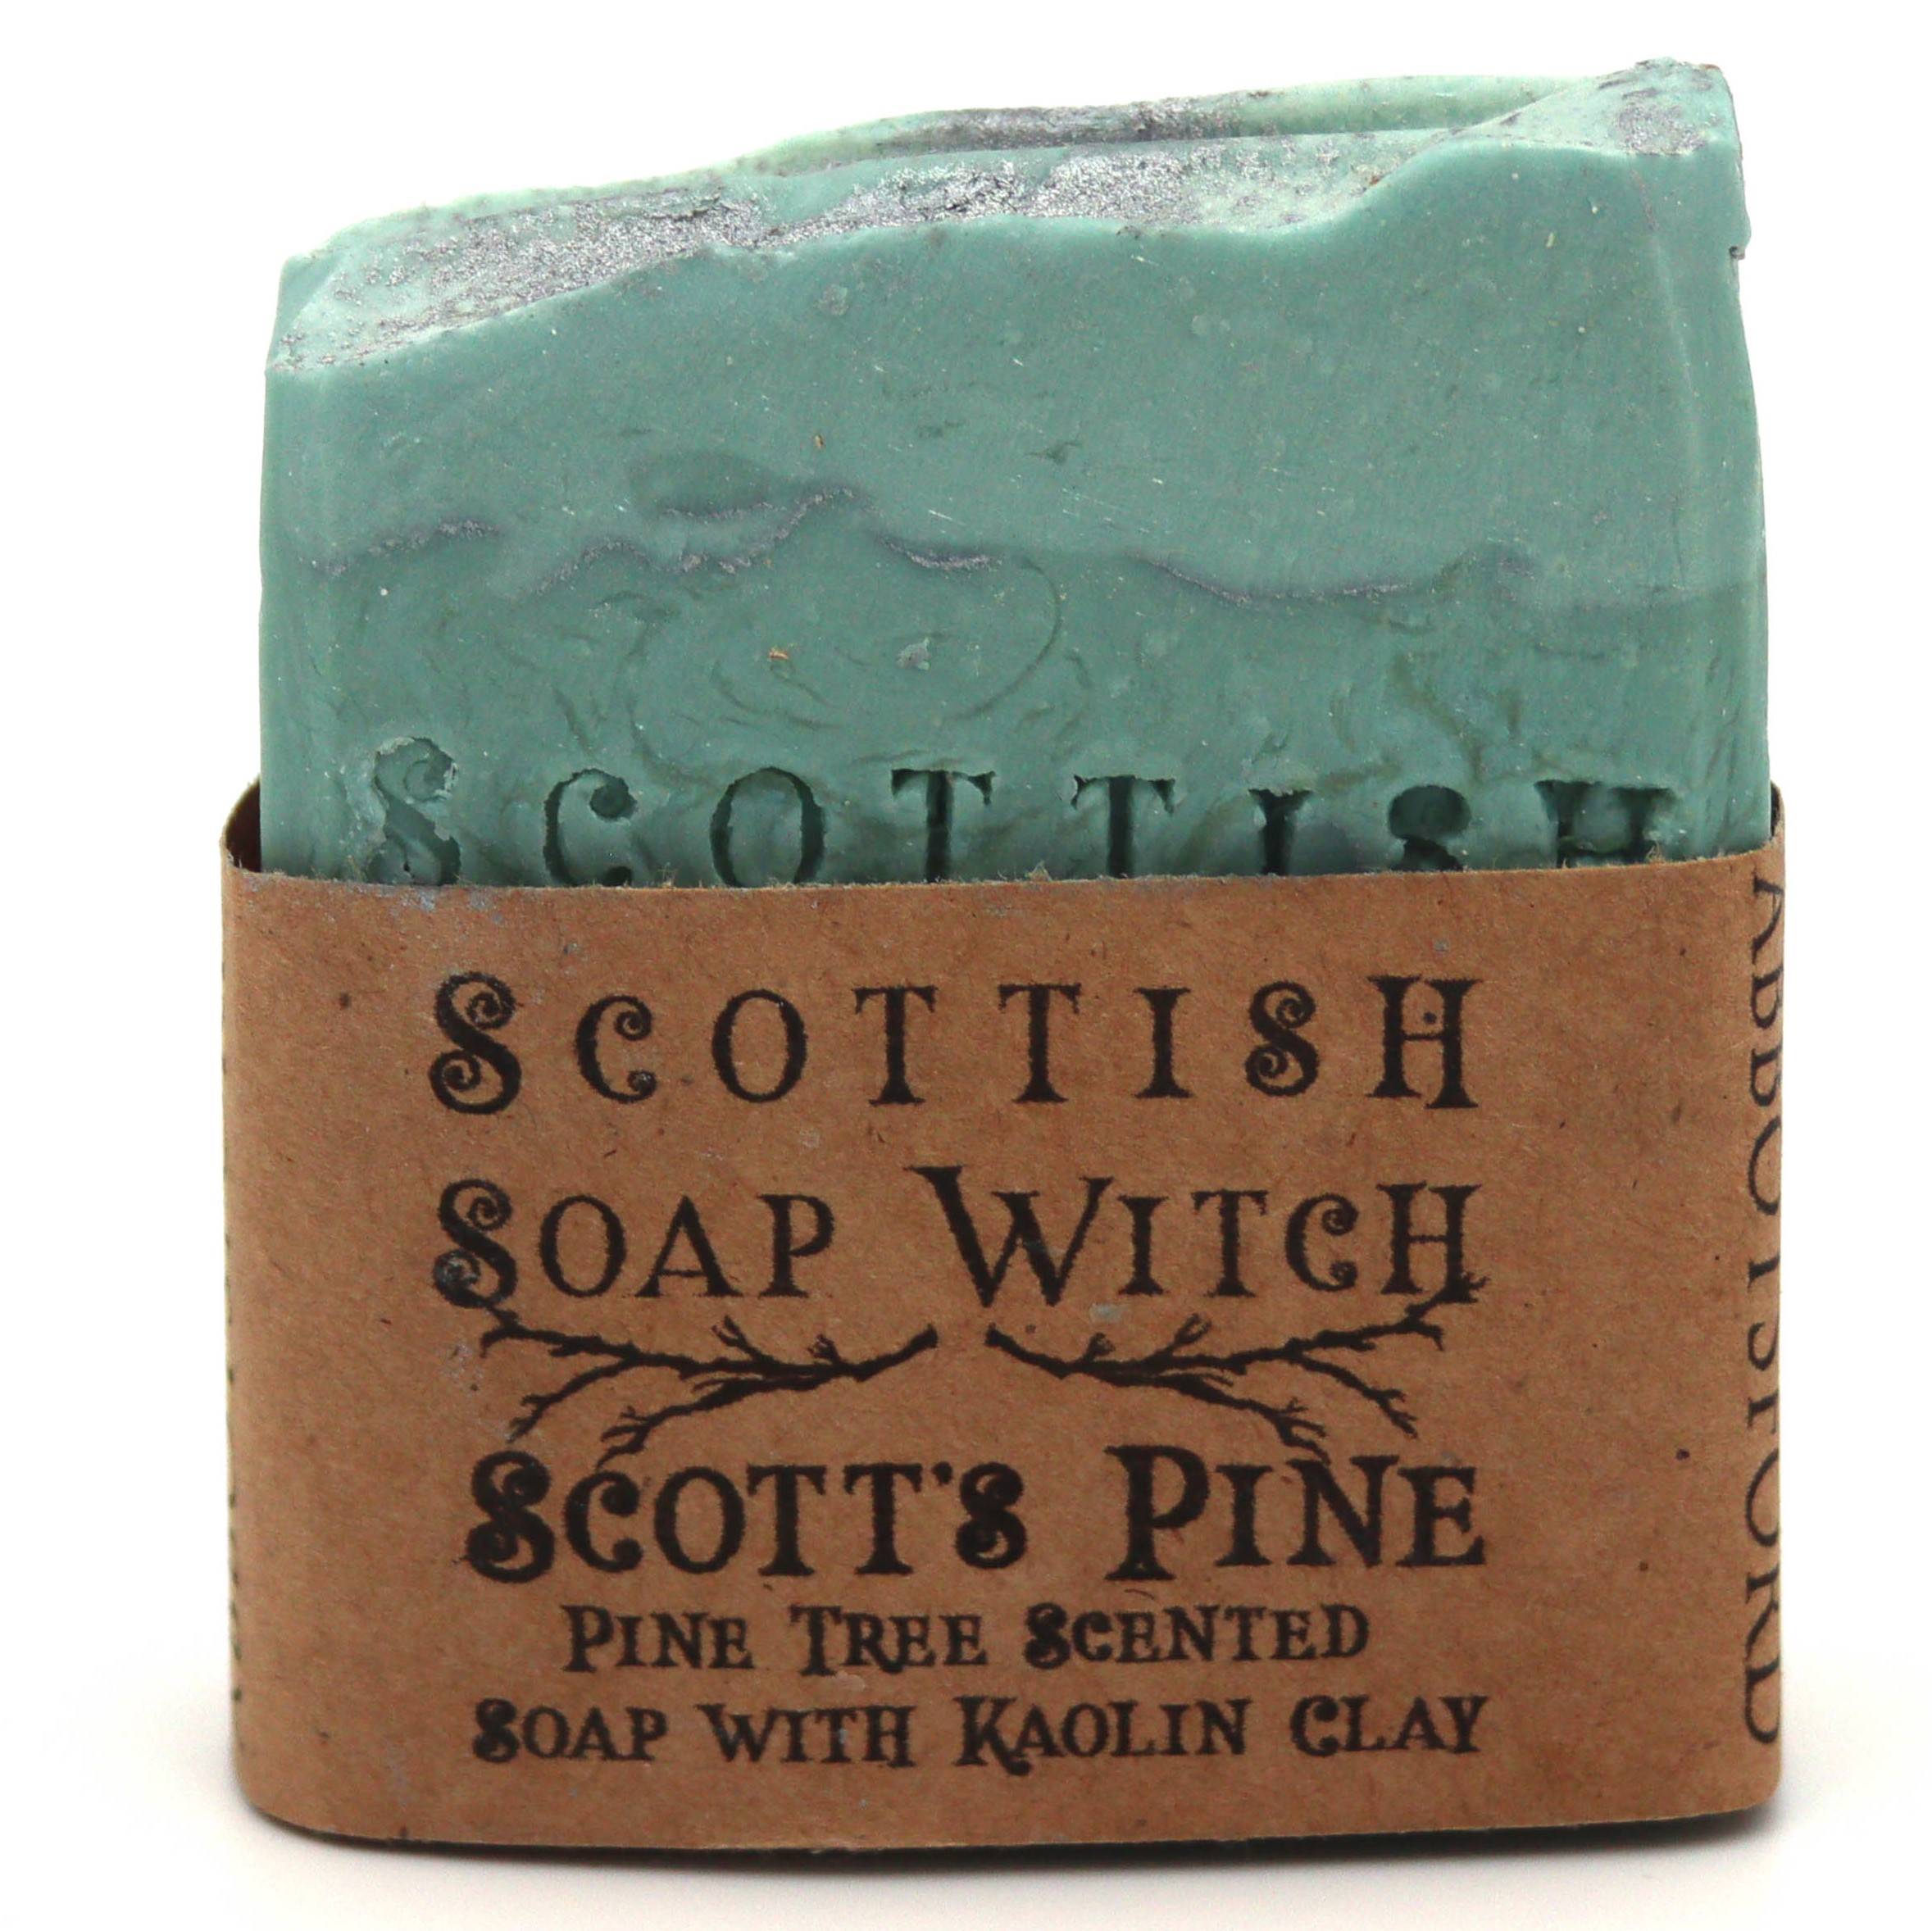 Scotts Pine Soap